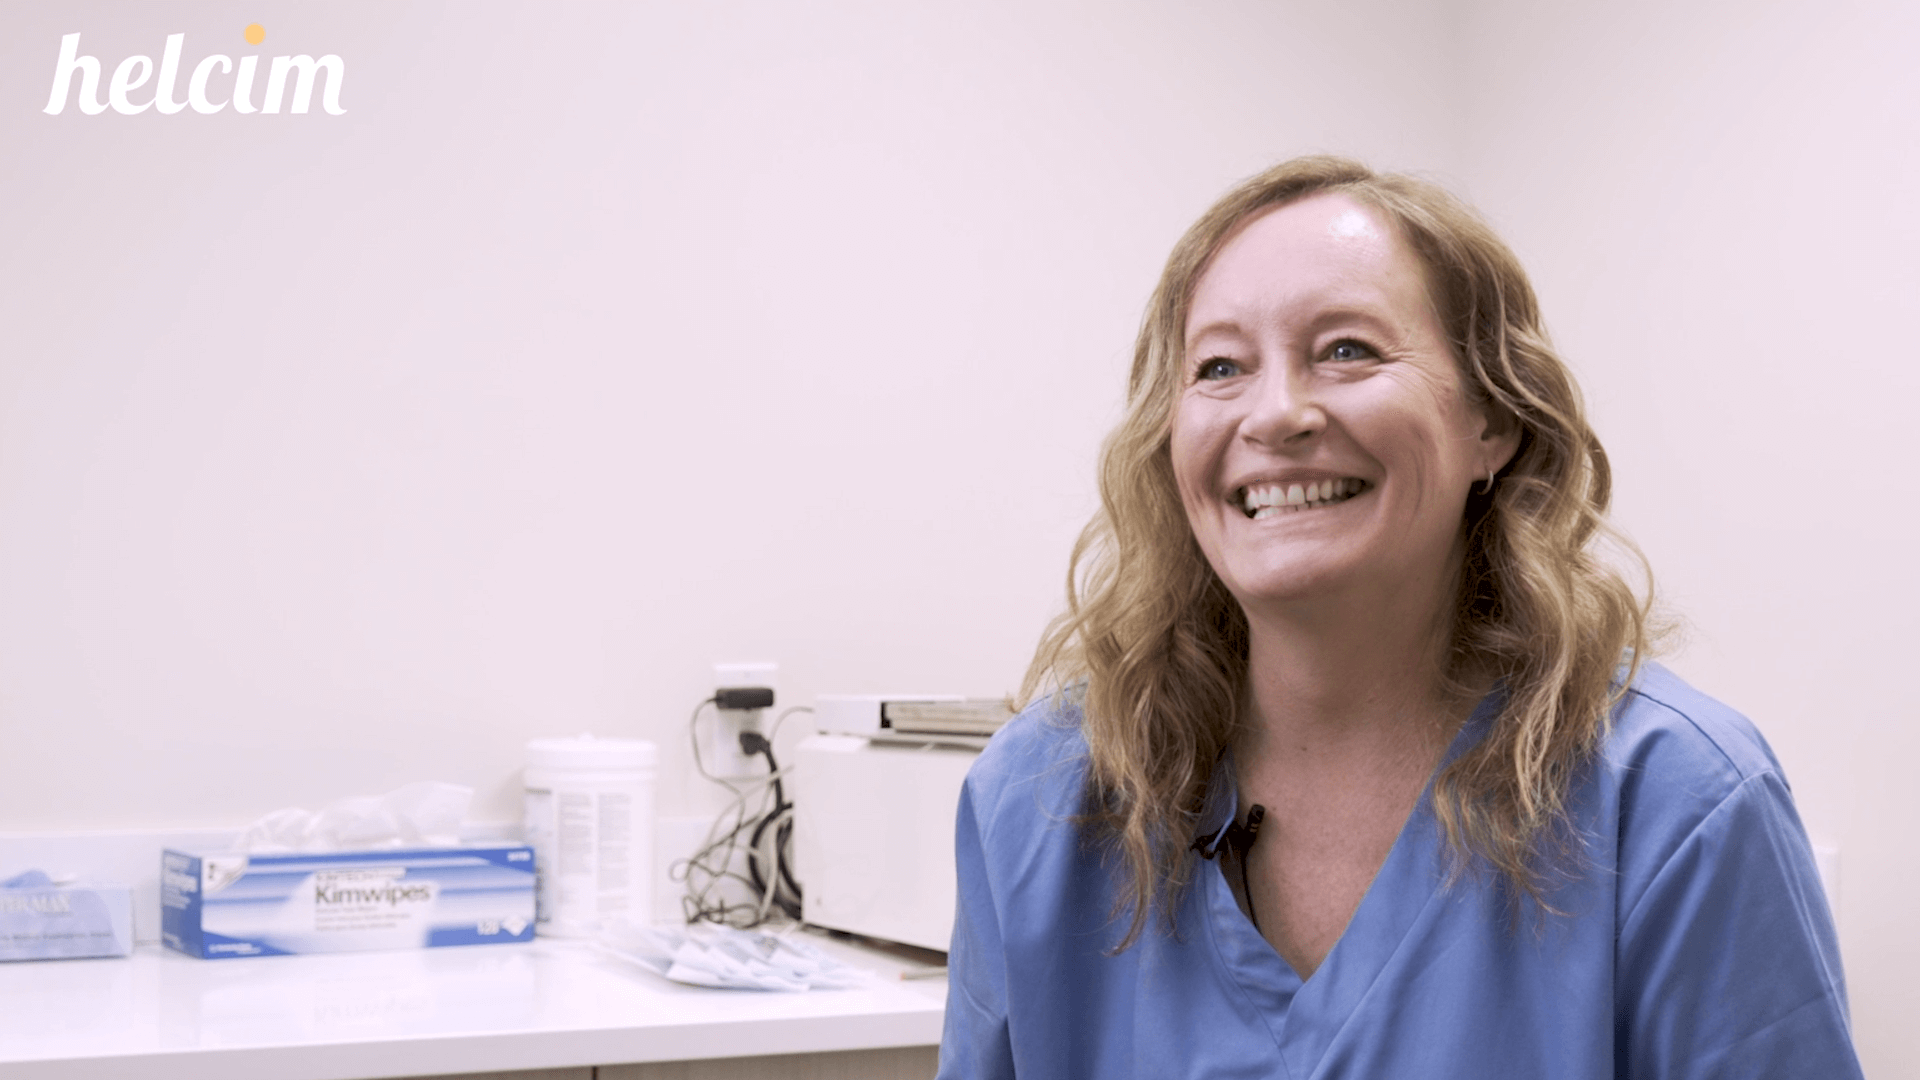 Colette Murray dental hygienist of Access Dental Hygiene services